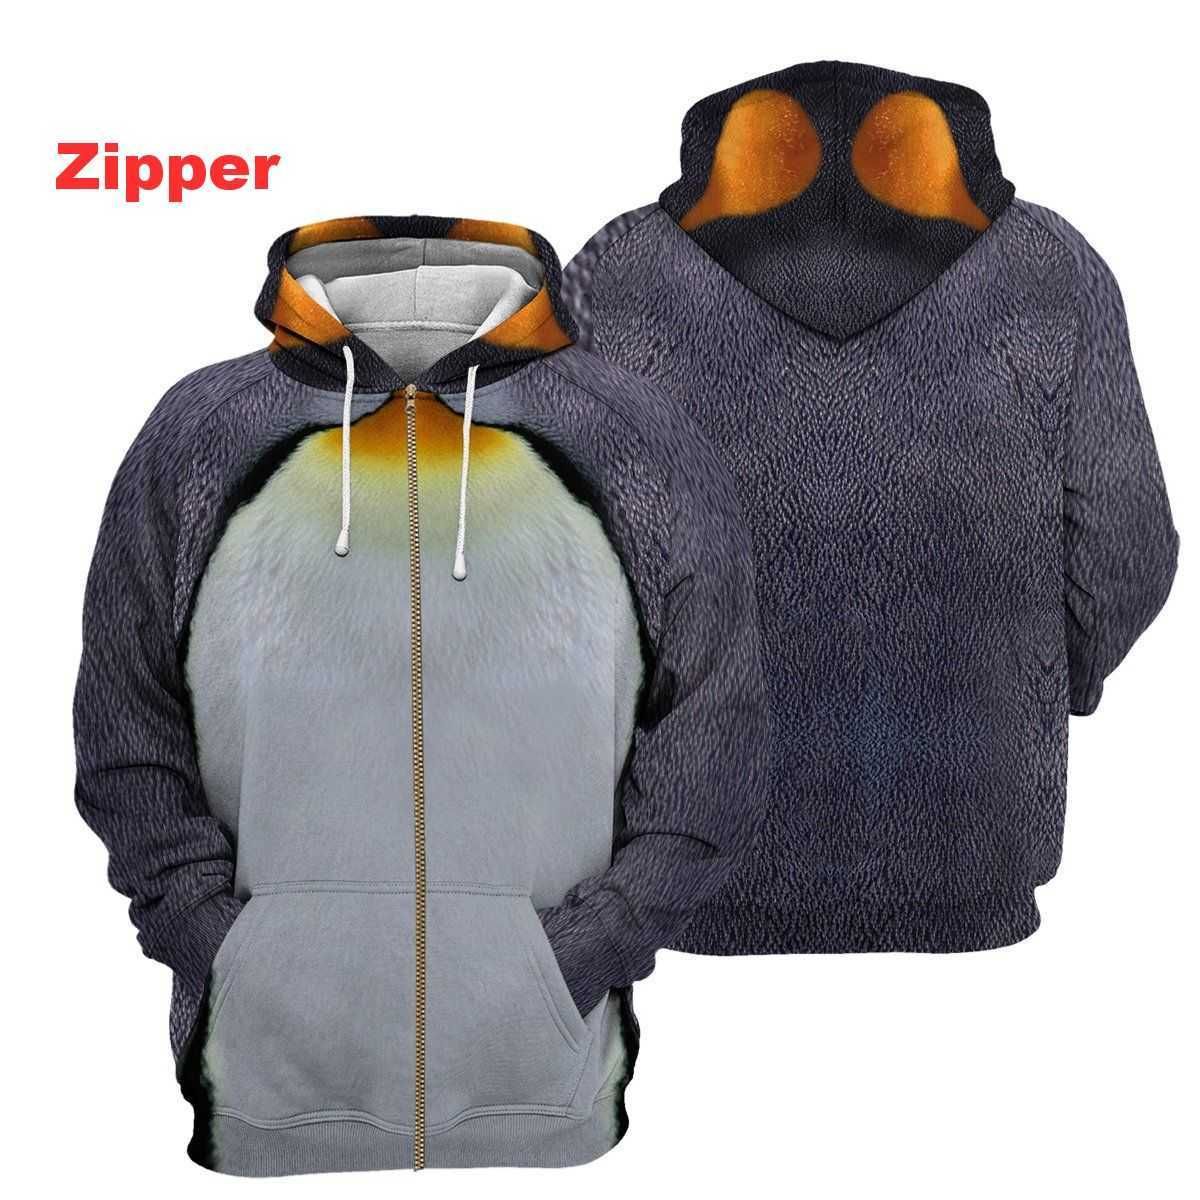 zipper hoodie